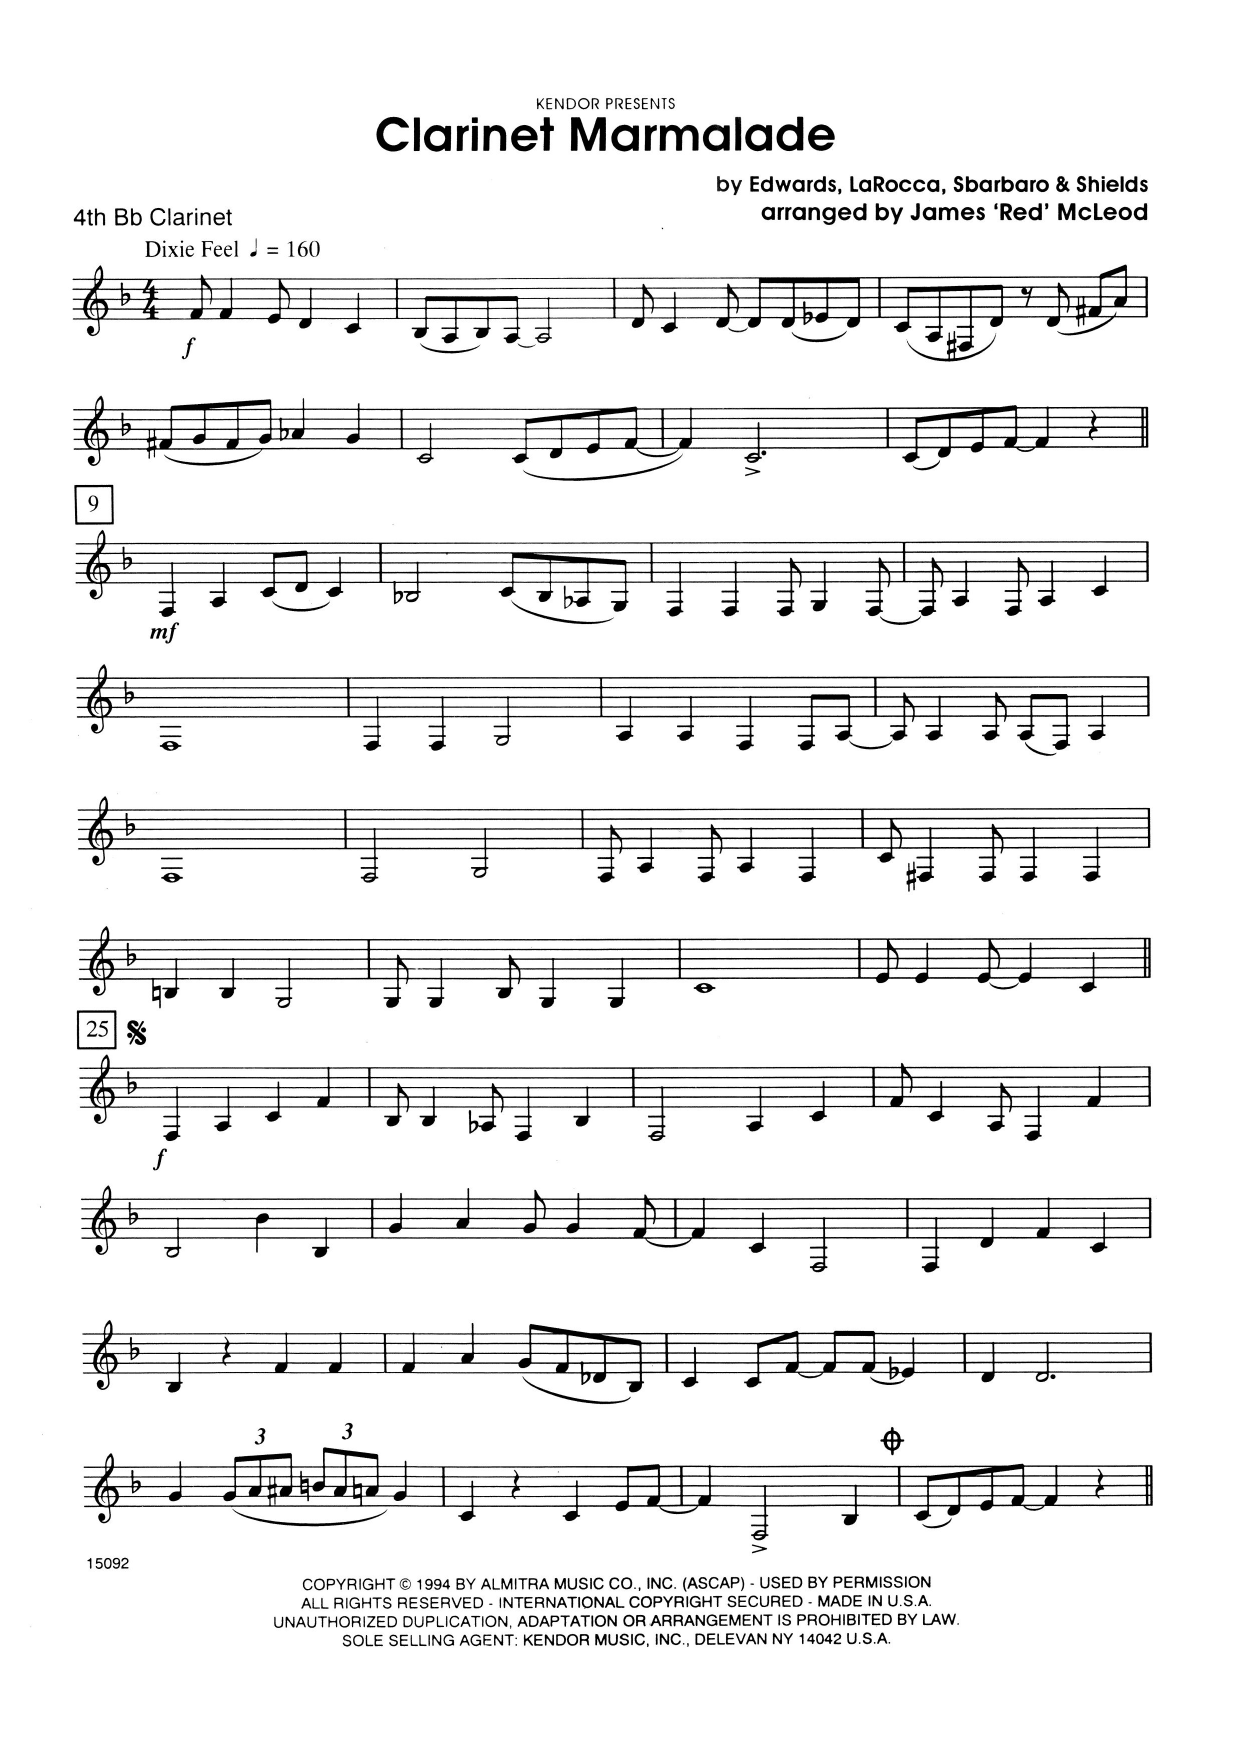 Download James 'Red' McLoud Clarinet Marmalade - 4th Bb Clarinet Sheet Music